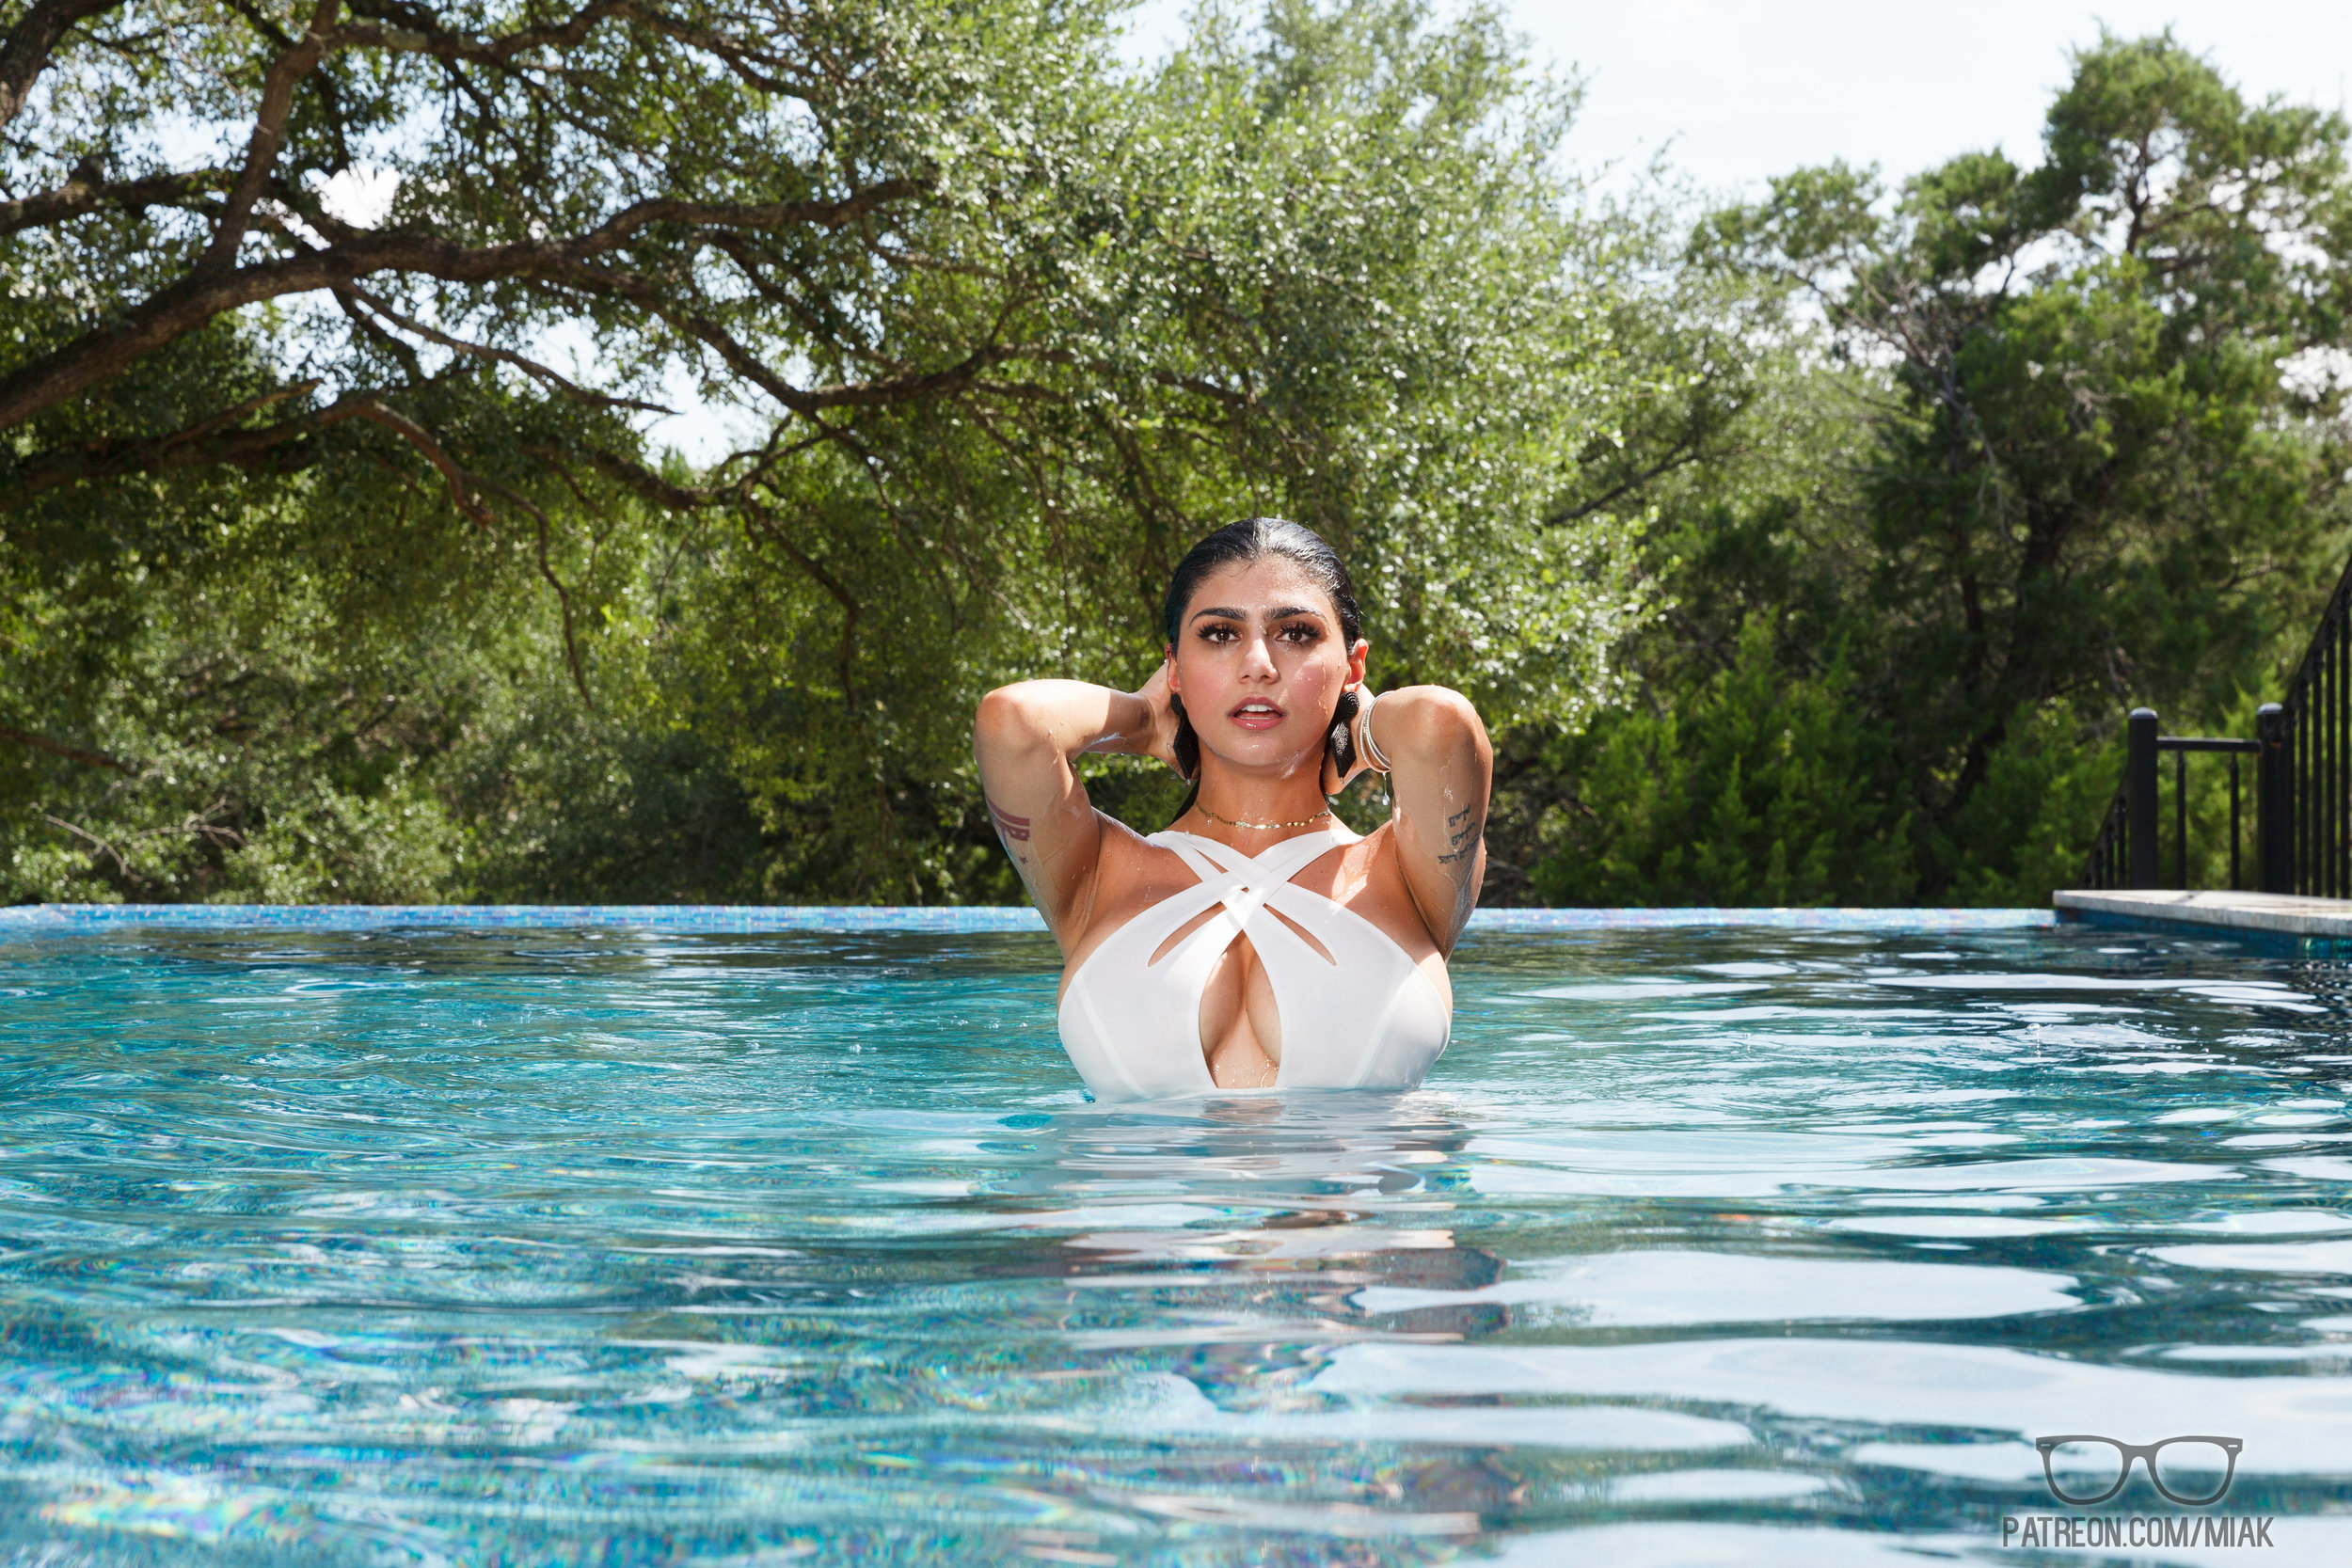 People 2500x1667 Mia Khalifa women pornstar white dress swimming pool boobs wet